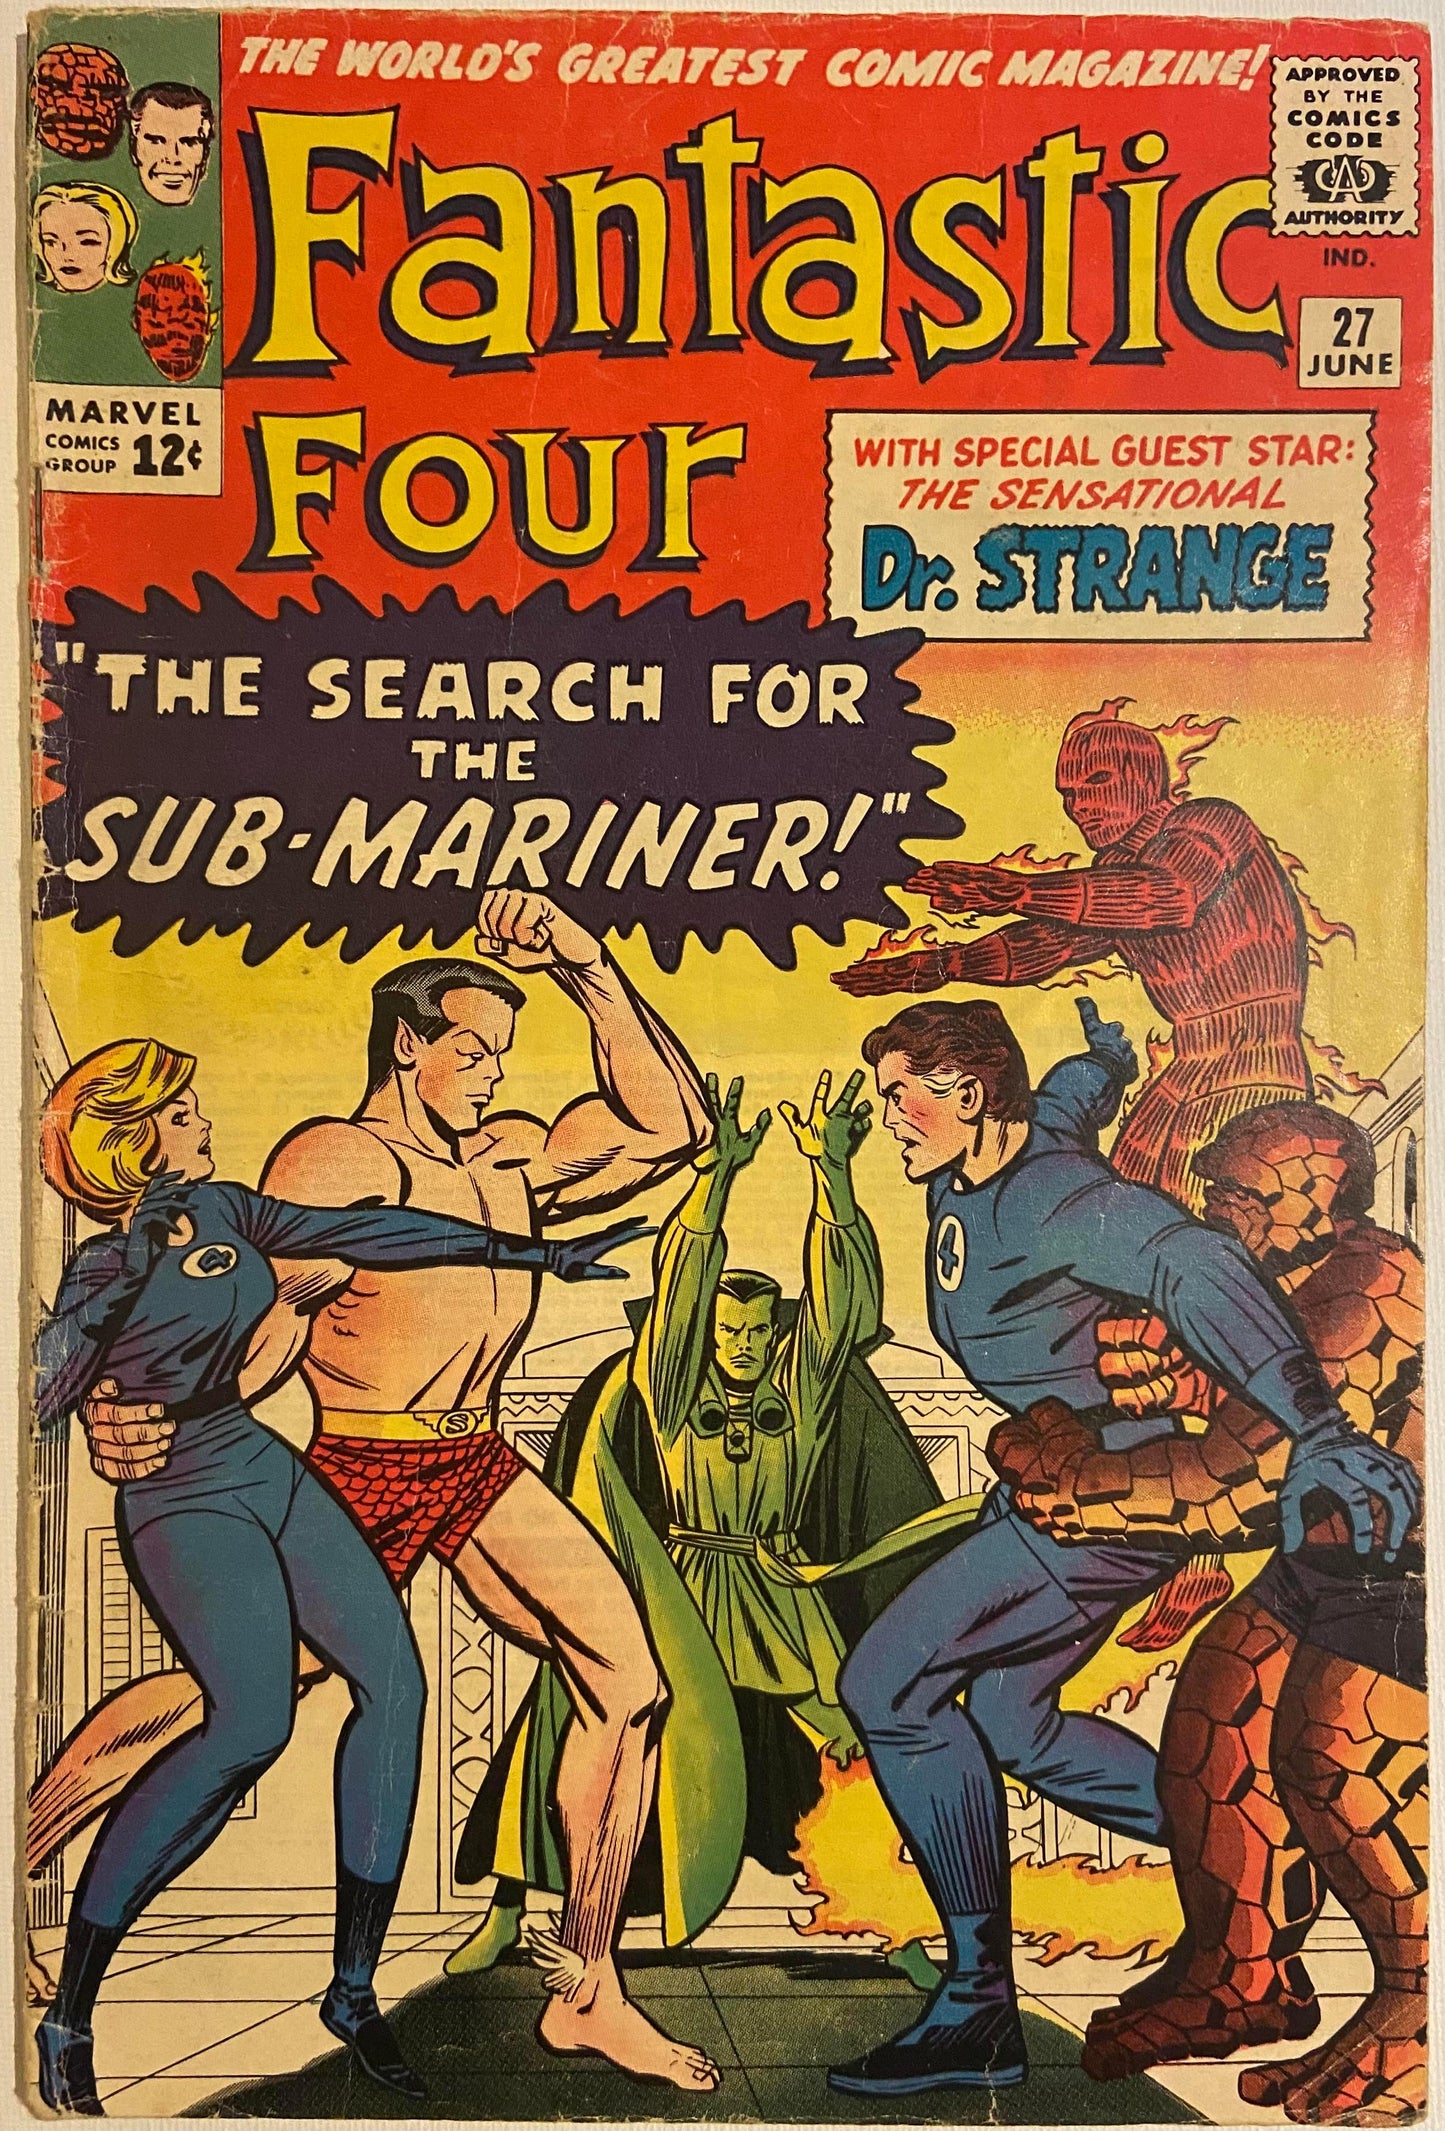 Fantastic Four #27 - HolyGrail Comix